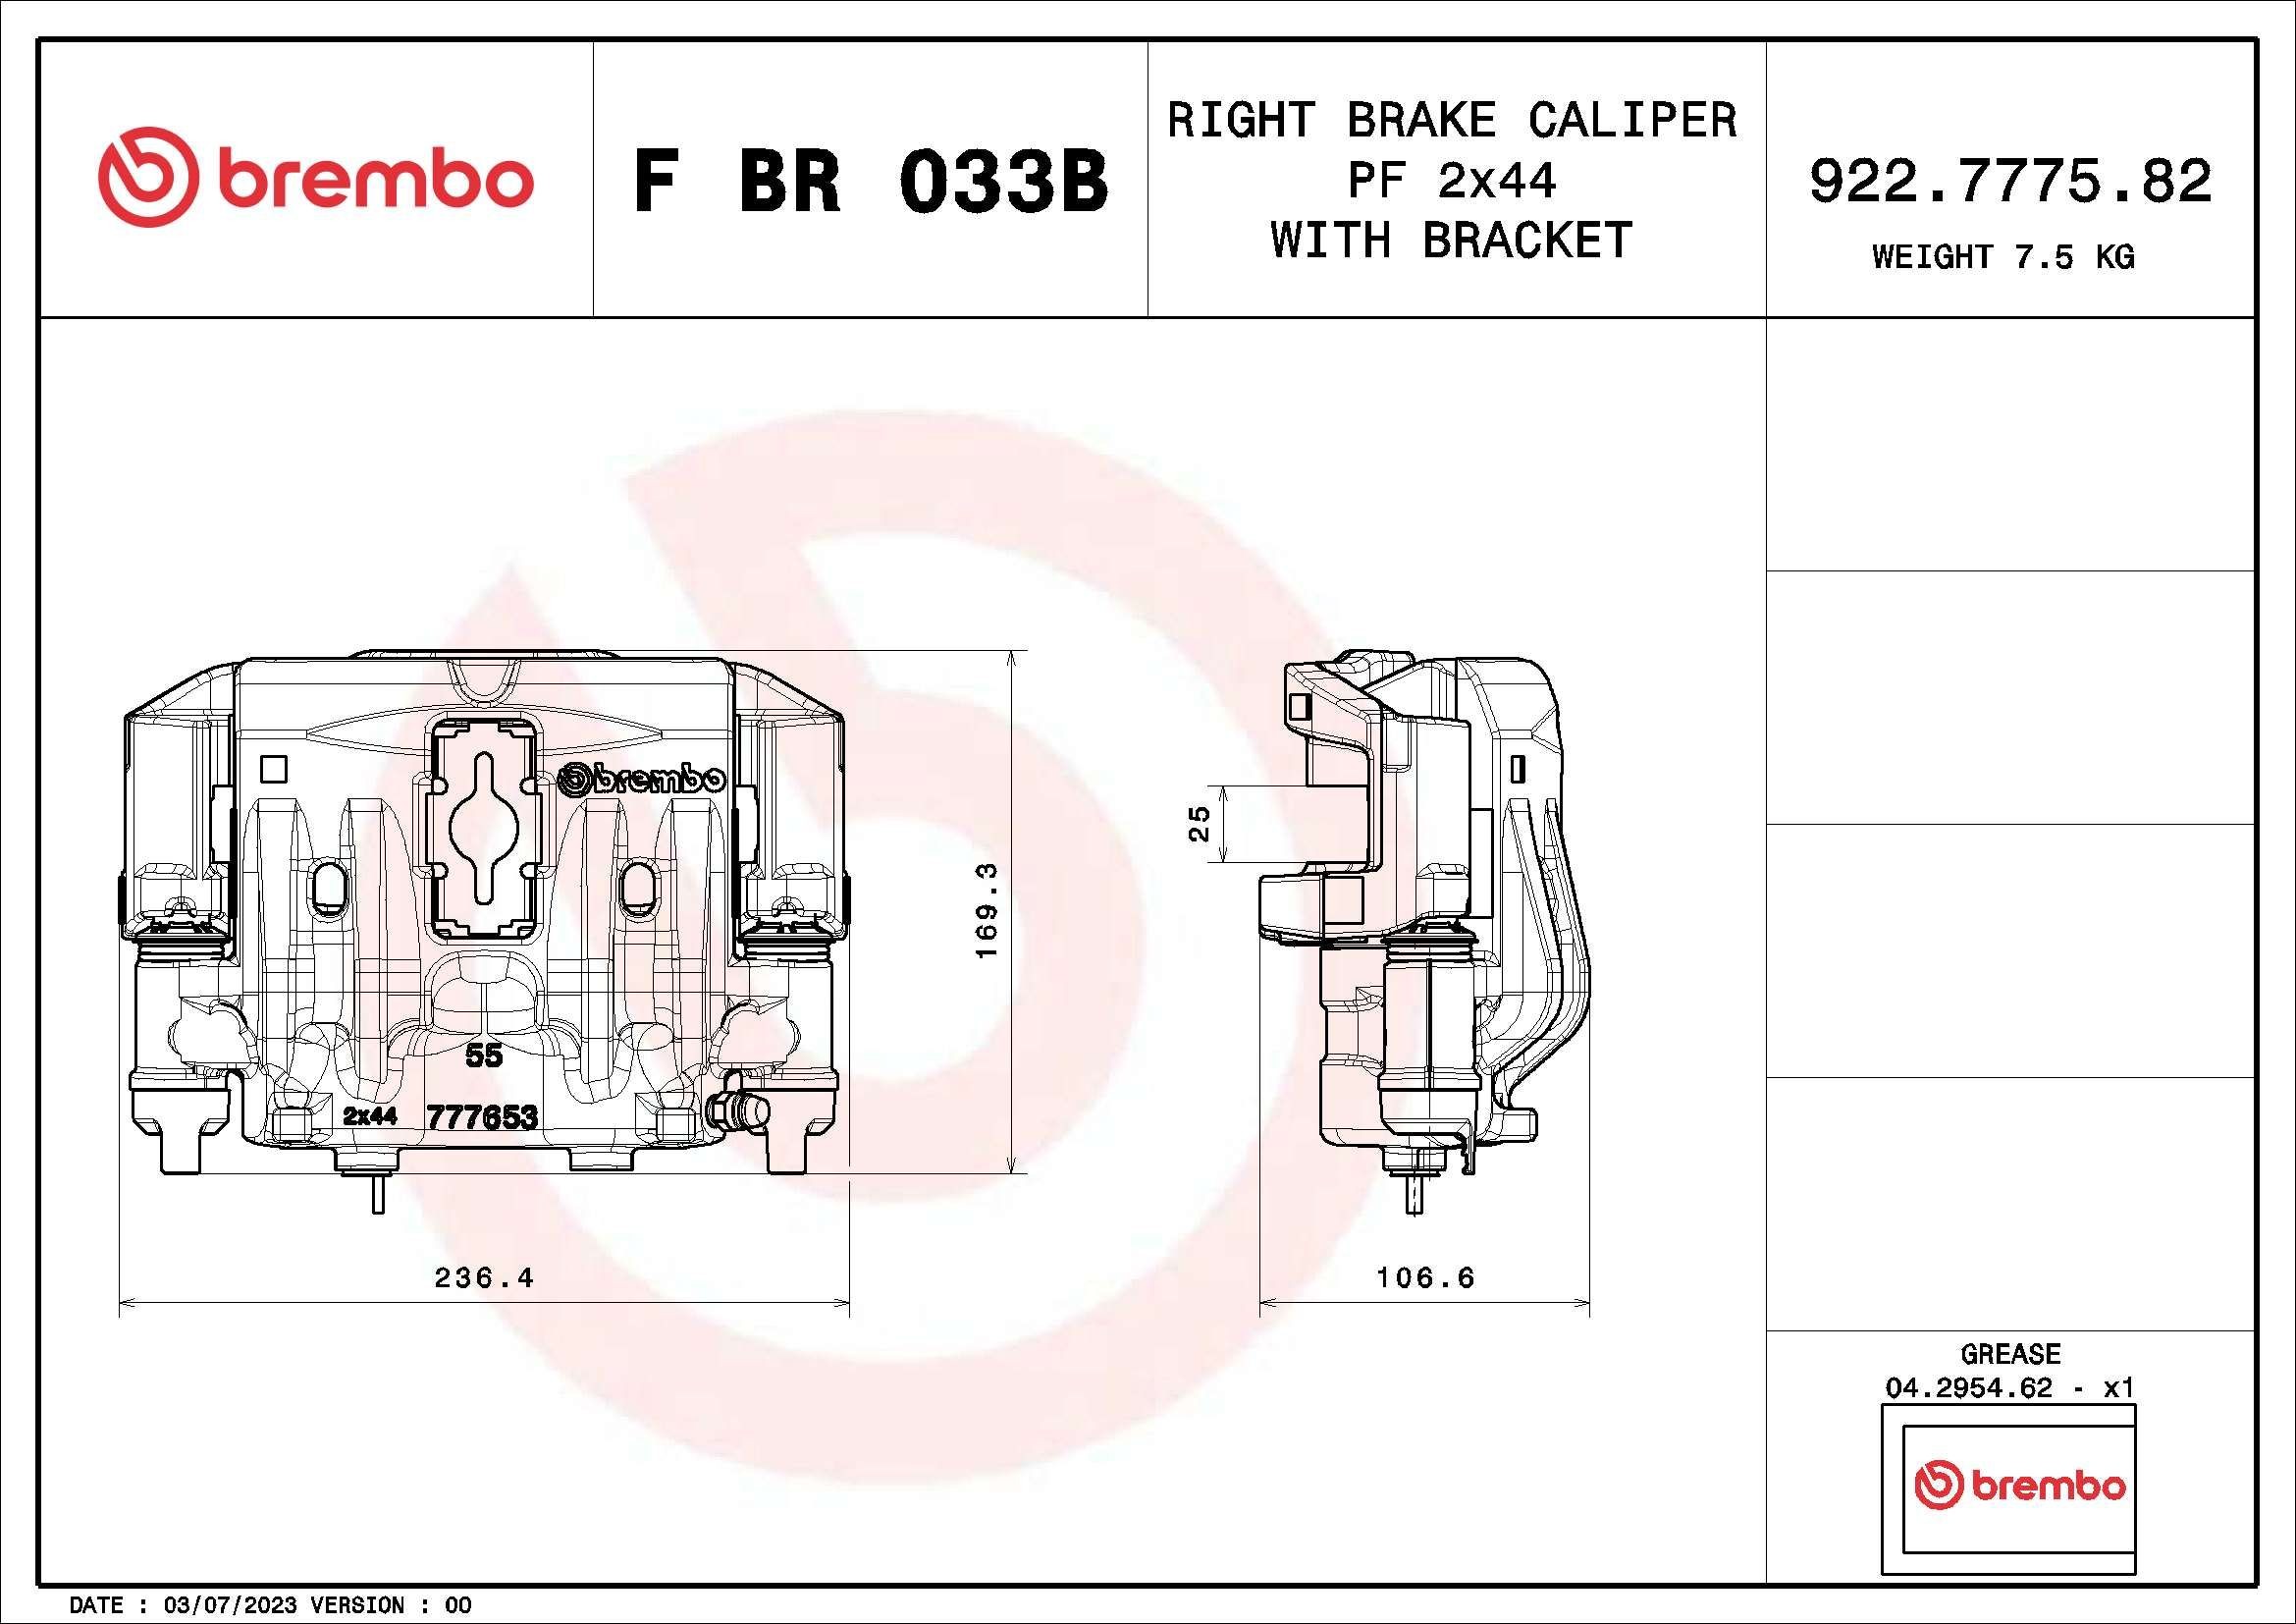 BREMBO Calipers F BR 033B